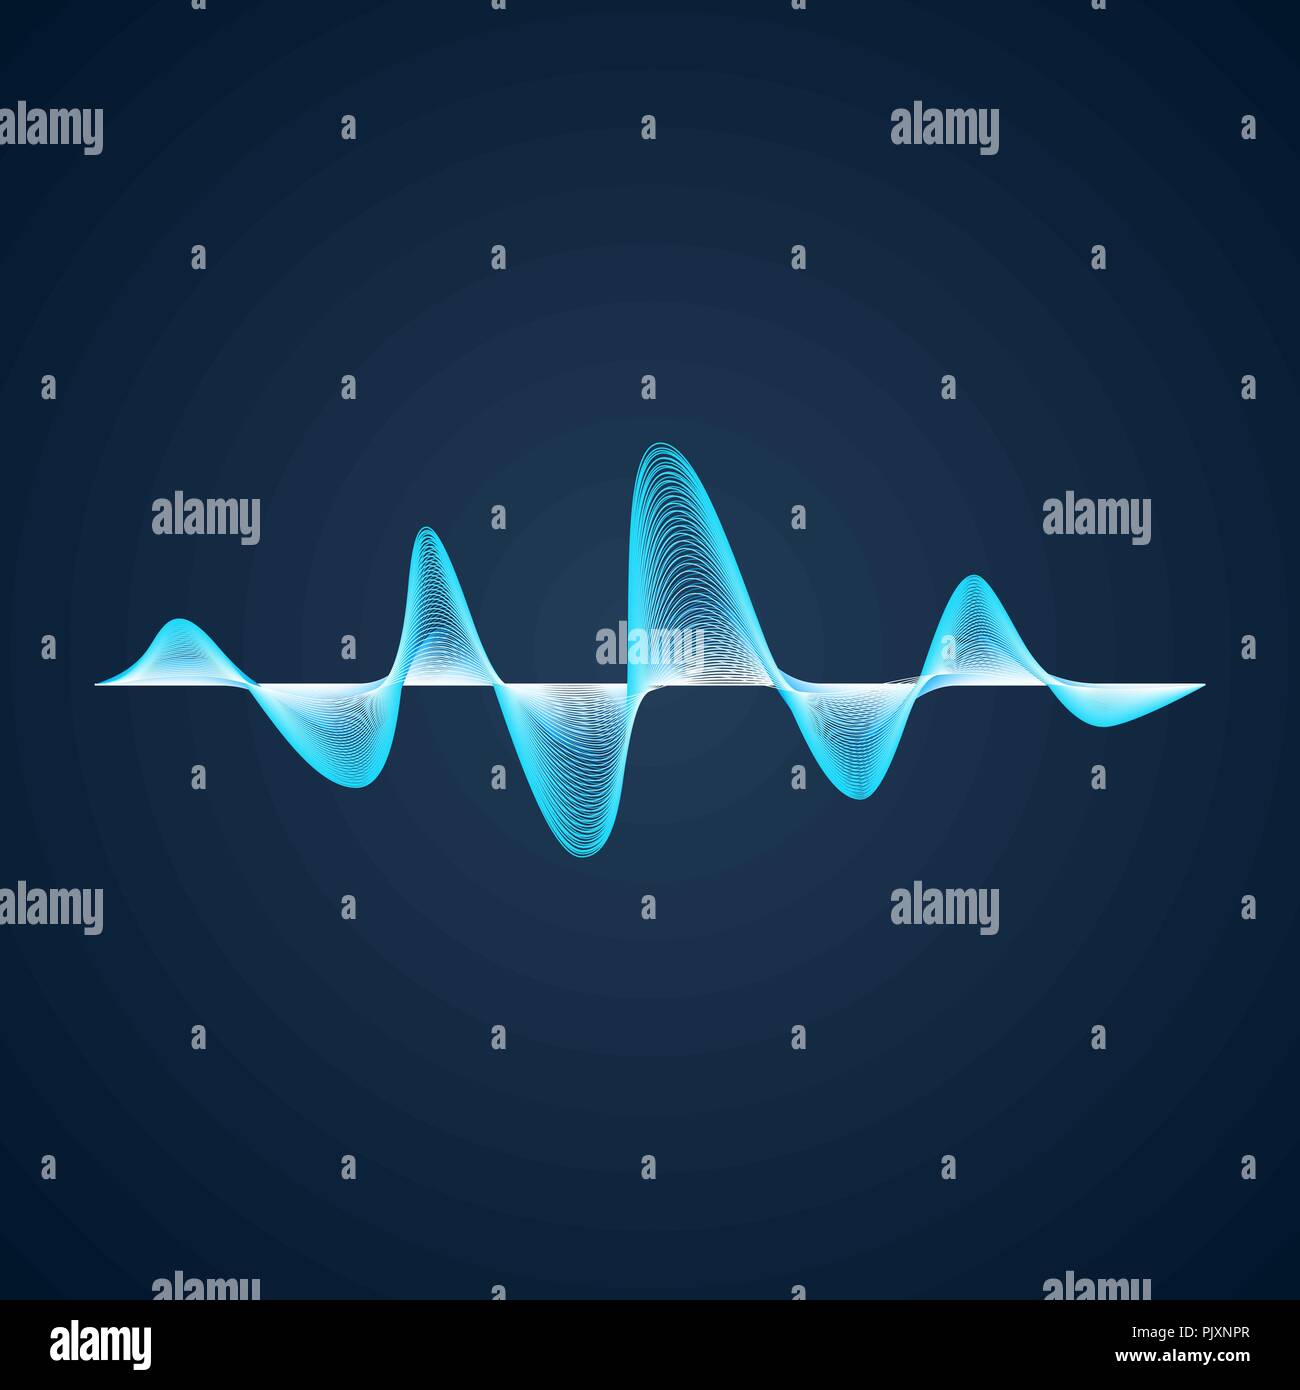 Sound wave Pattern. Equalizer graf Design. Abstrakt Blau Digital Waveform. Vector Illustration auf dunklem Hintergrund isoliert Stock Vektor